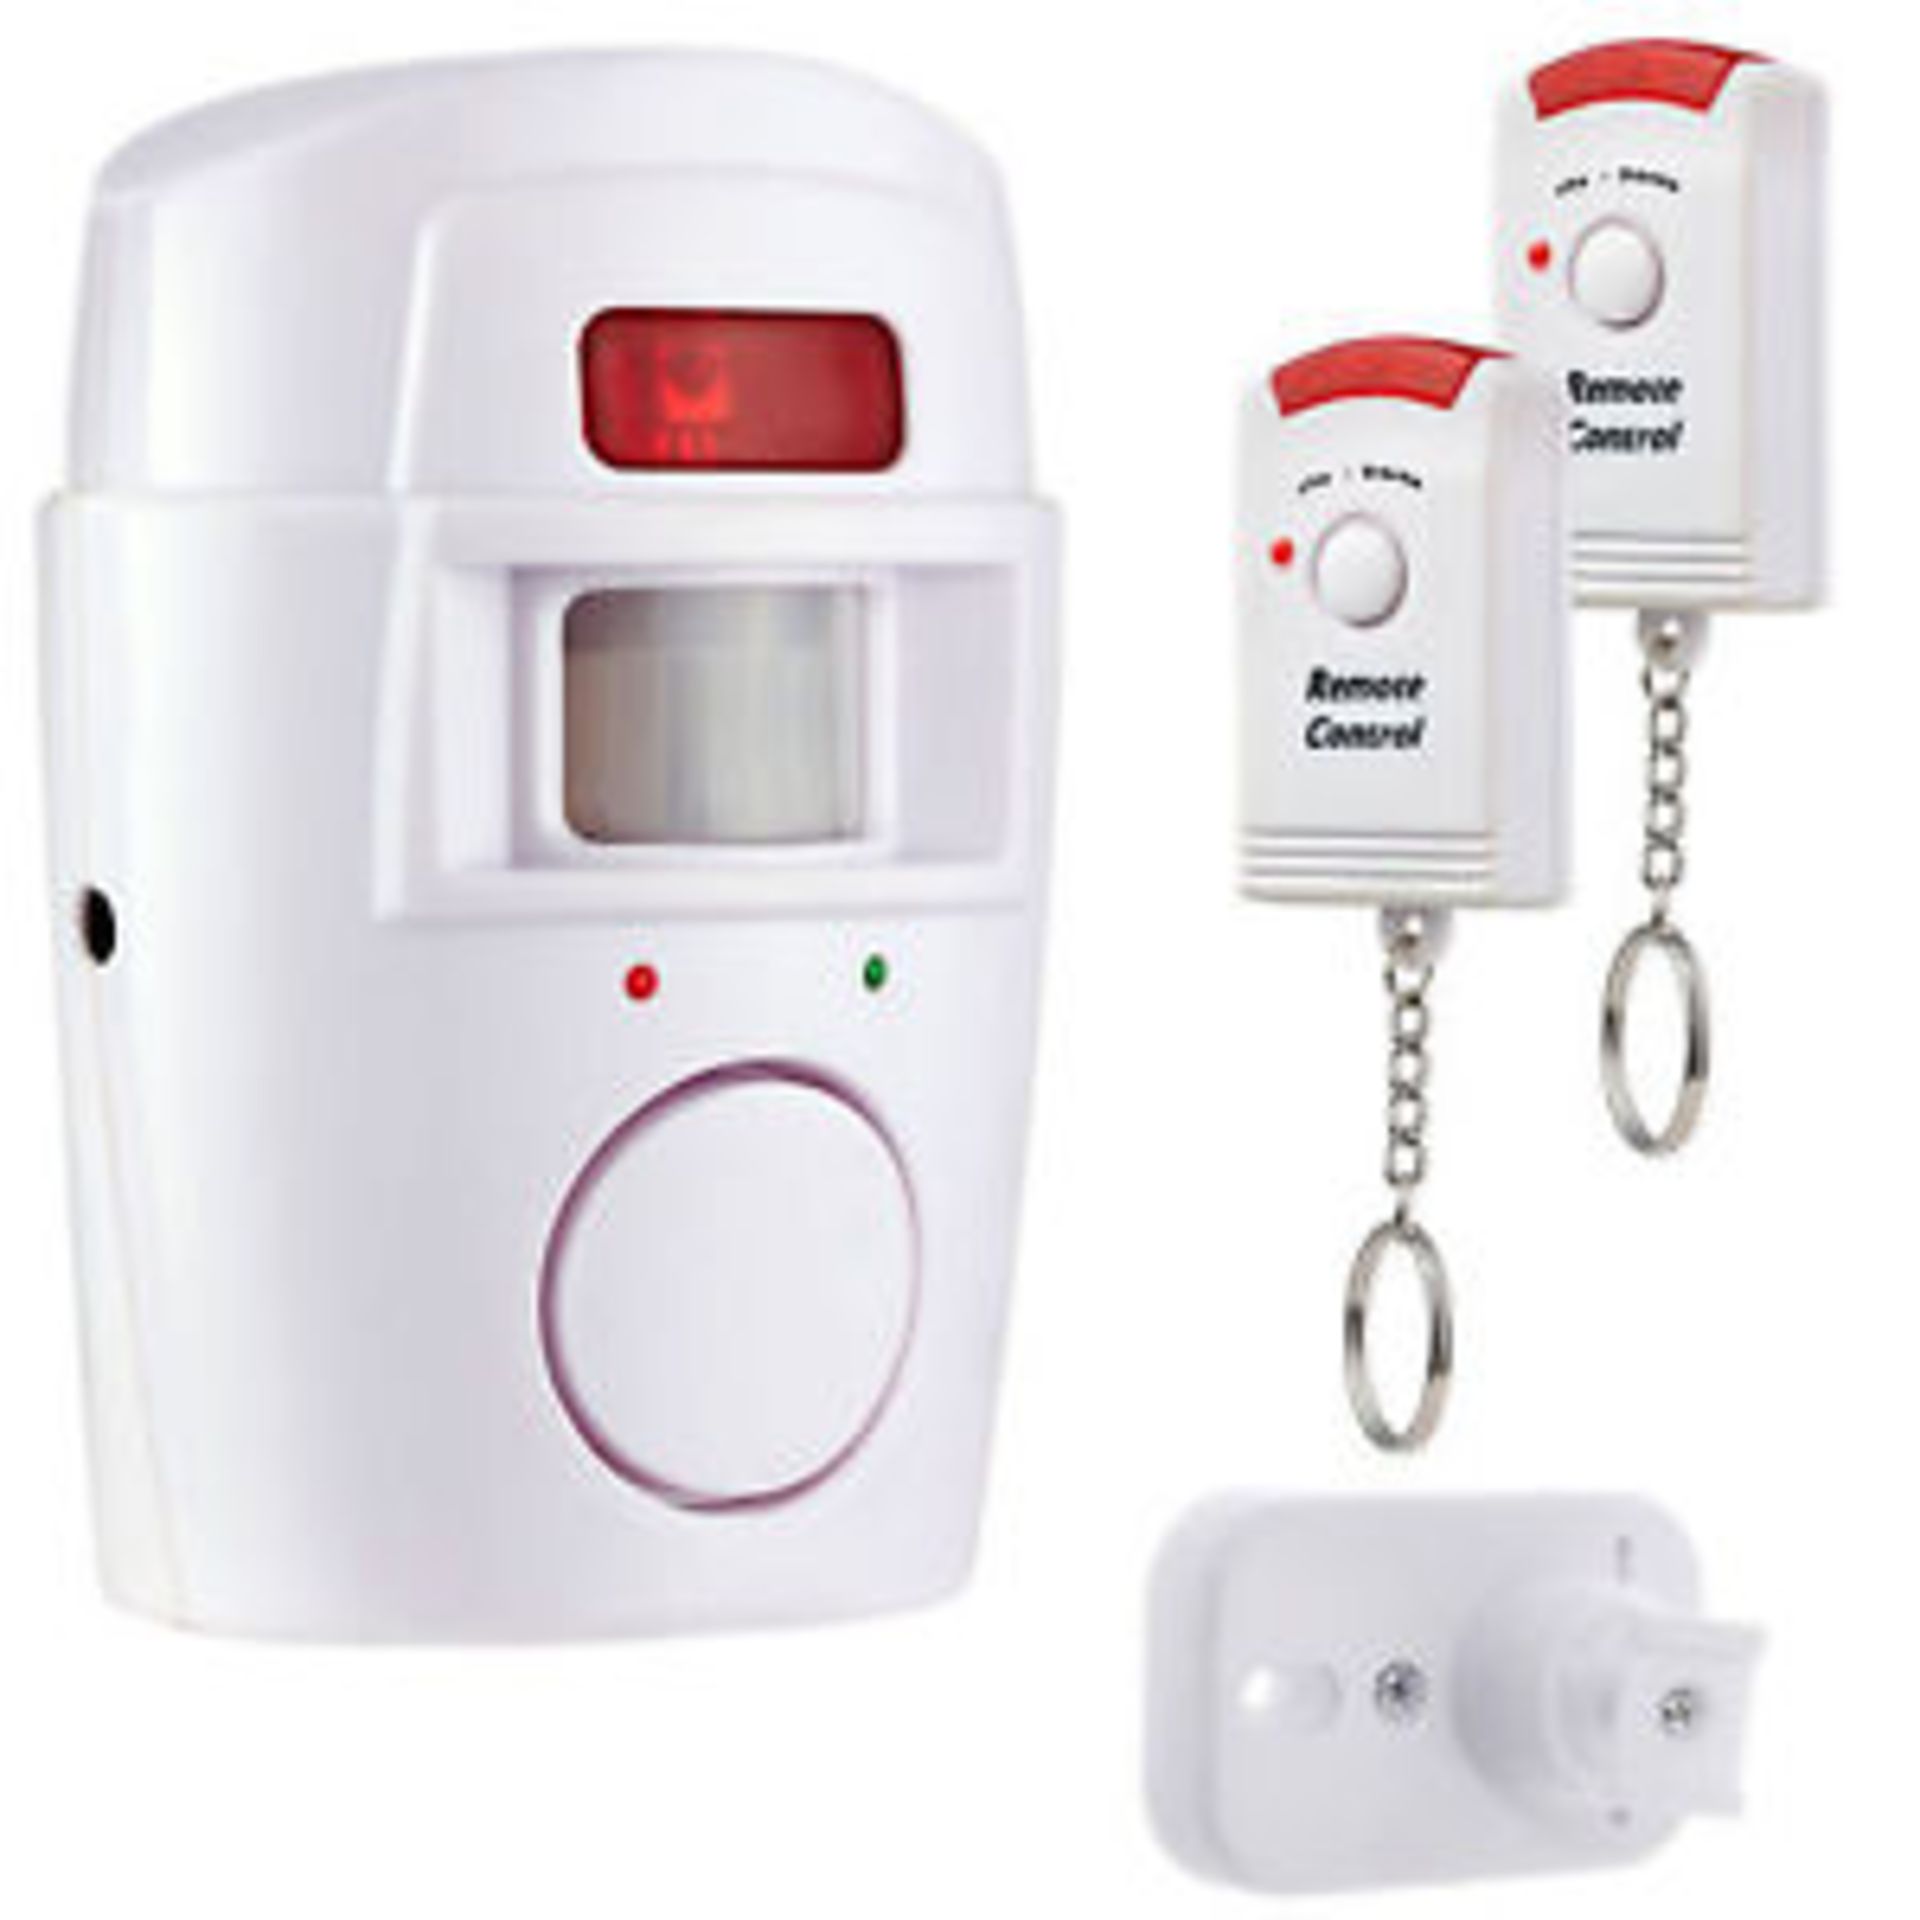 V Brand New Motion Sensor Alarm With 2 Remote Controls And 105Db Alarm